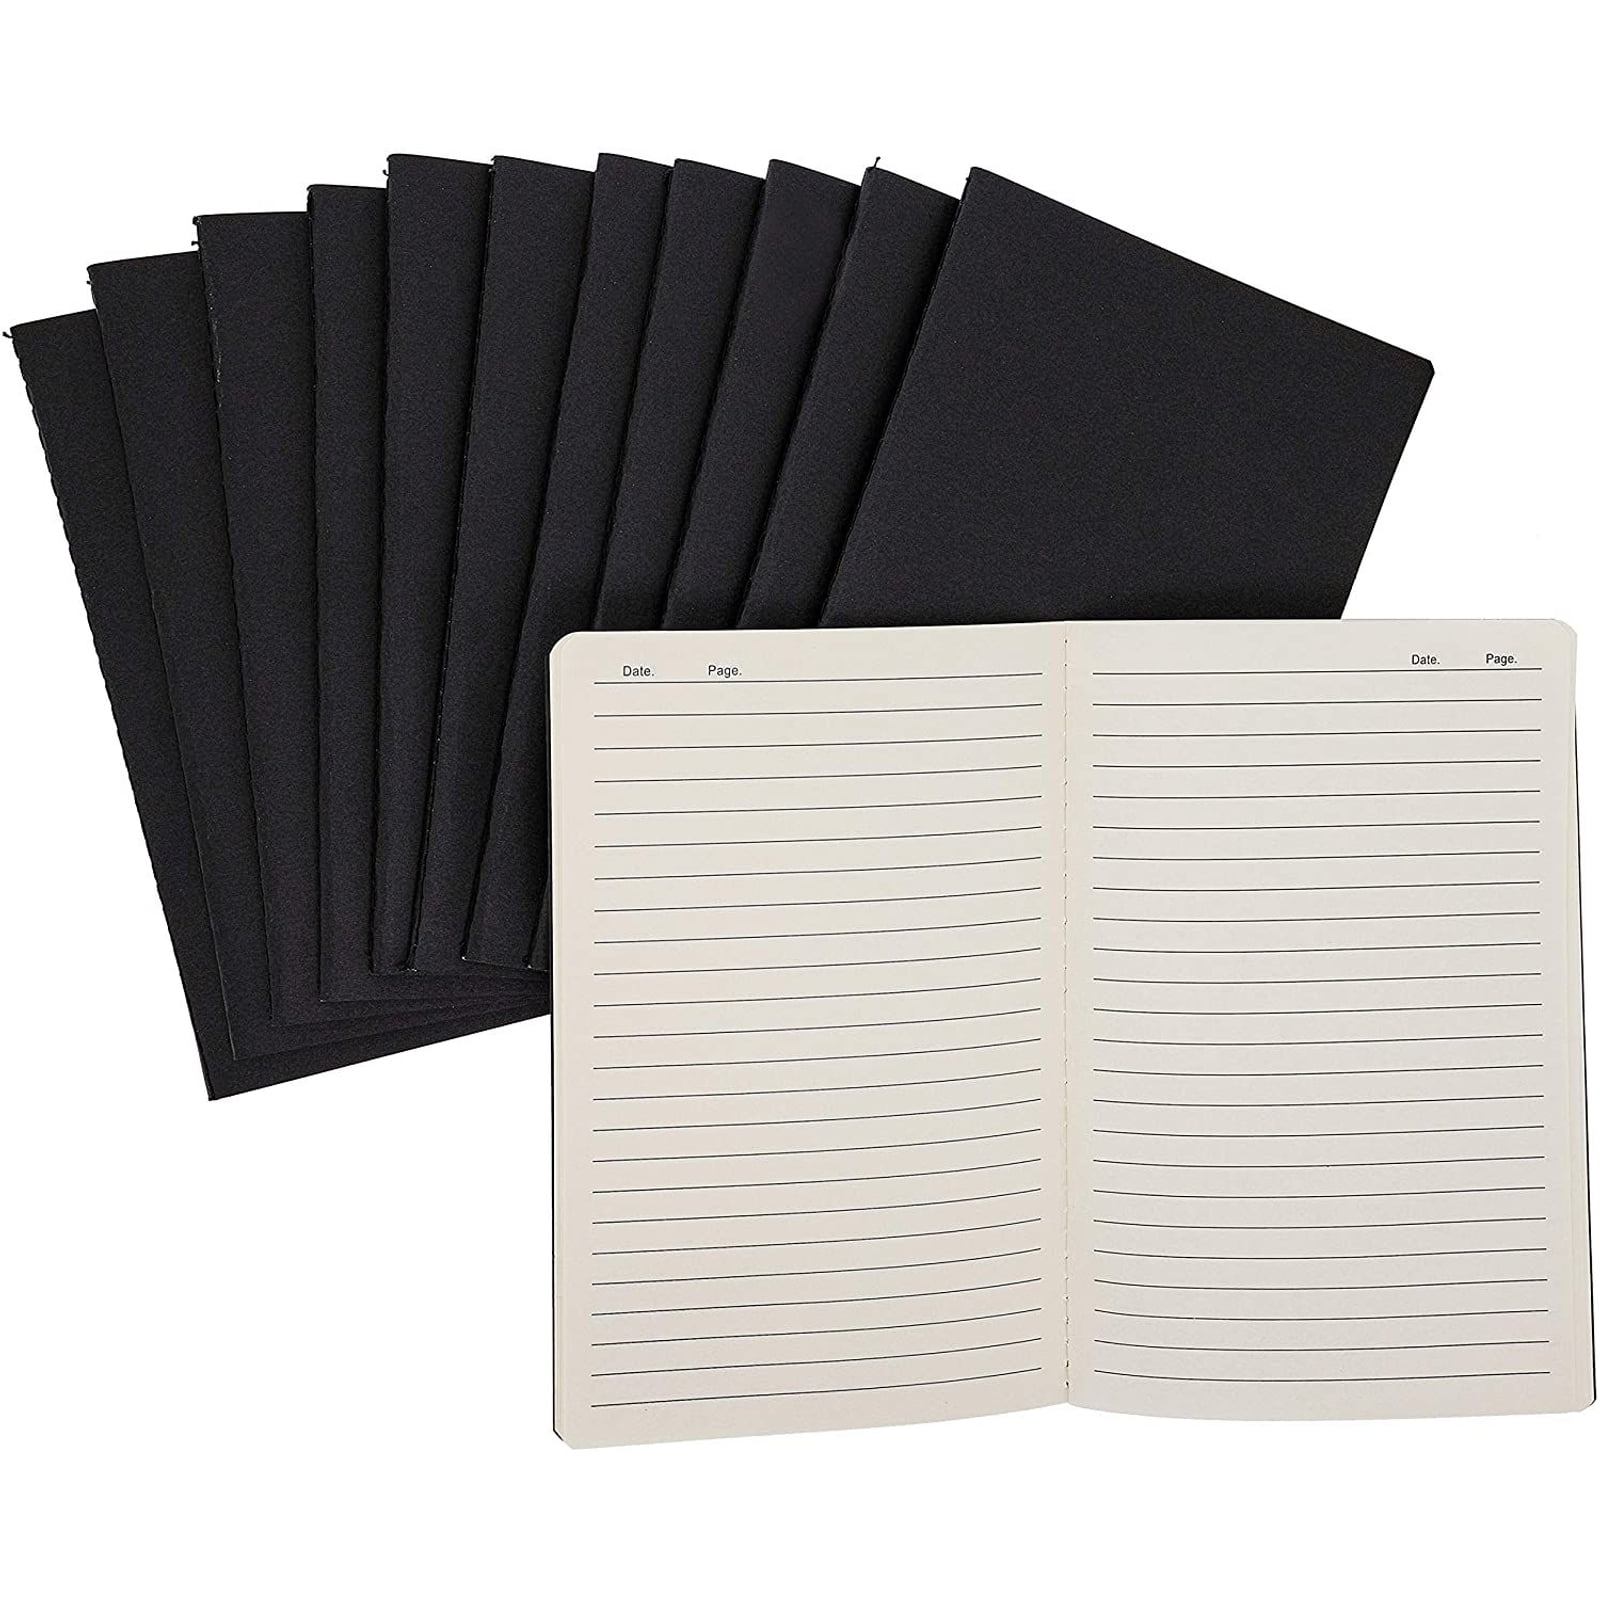 Labkiss 100 Pack Small Blank Notebook & Journal Bulk, Black Cover